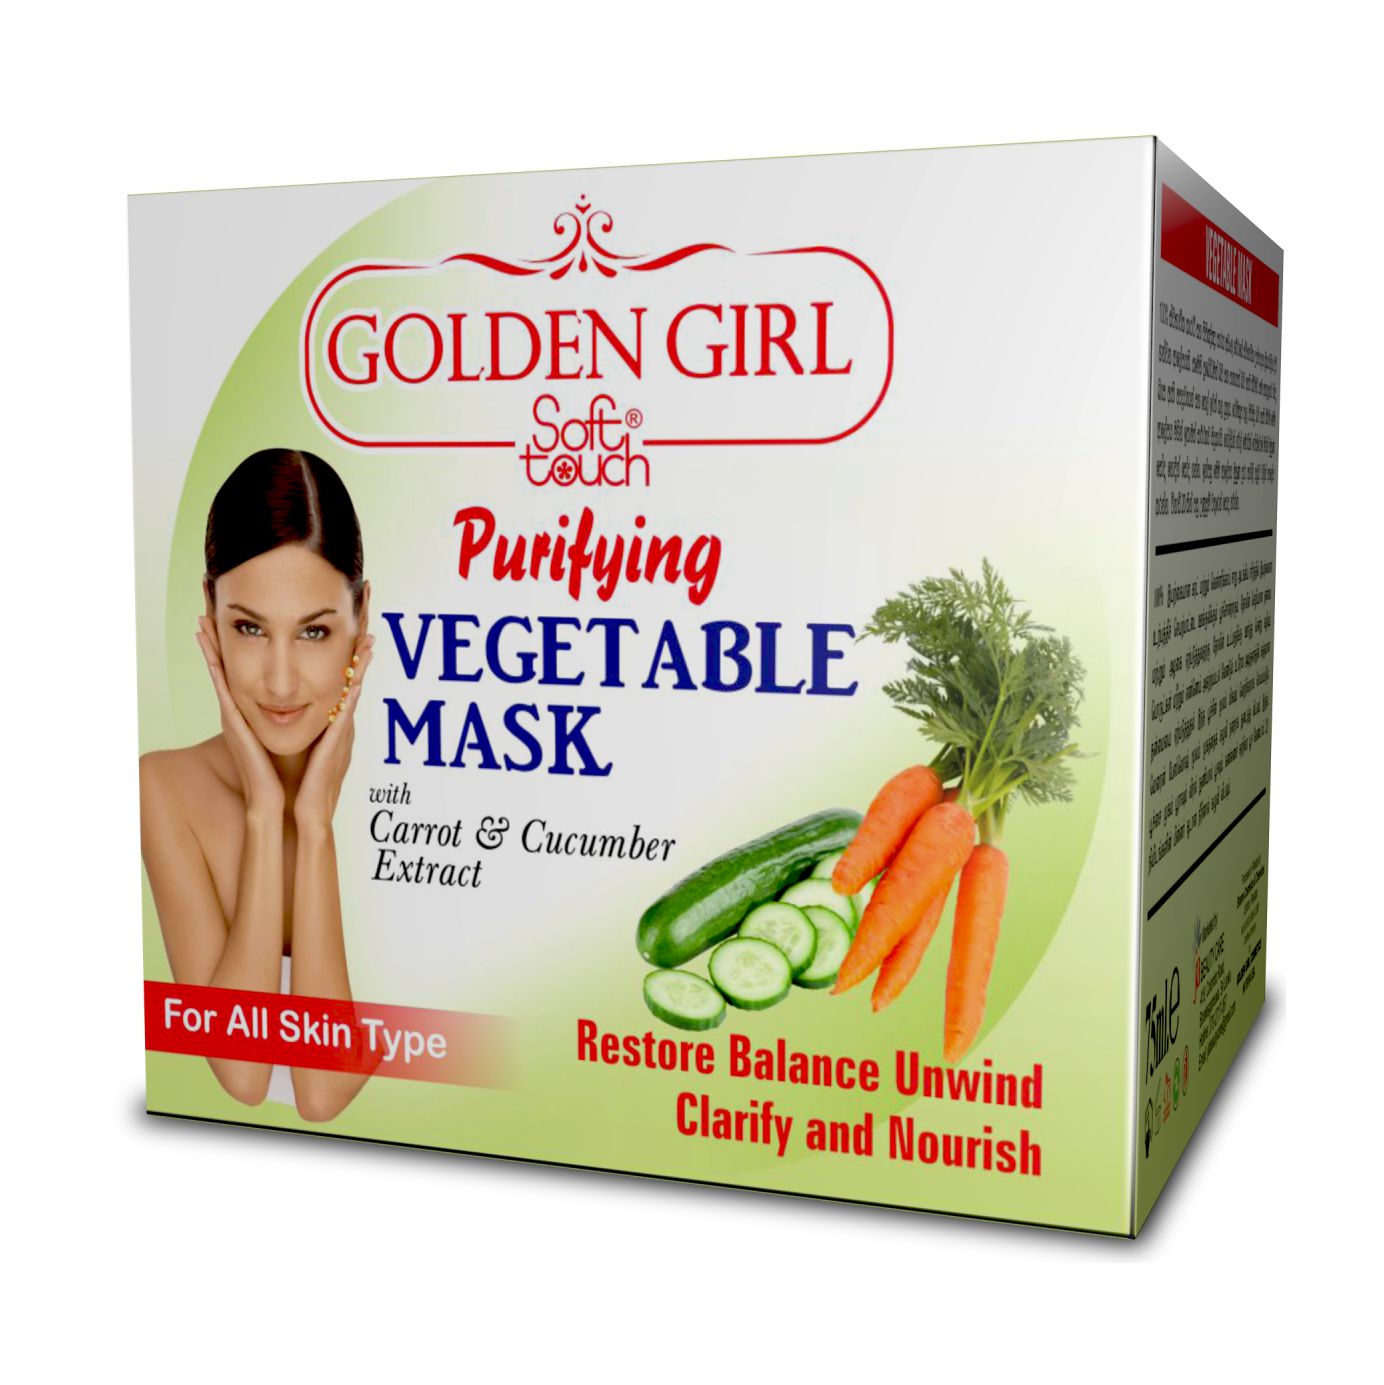 Vegetable Mask 75gm - Golden Girl Cosmetics